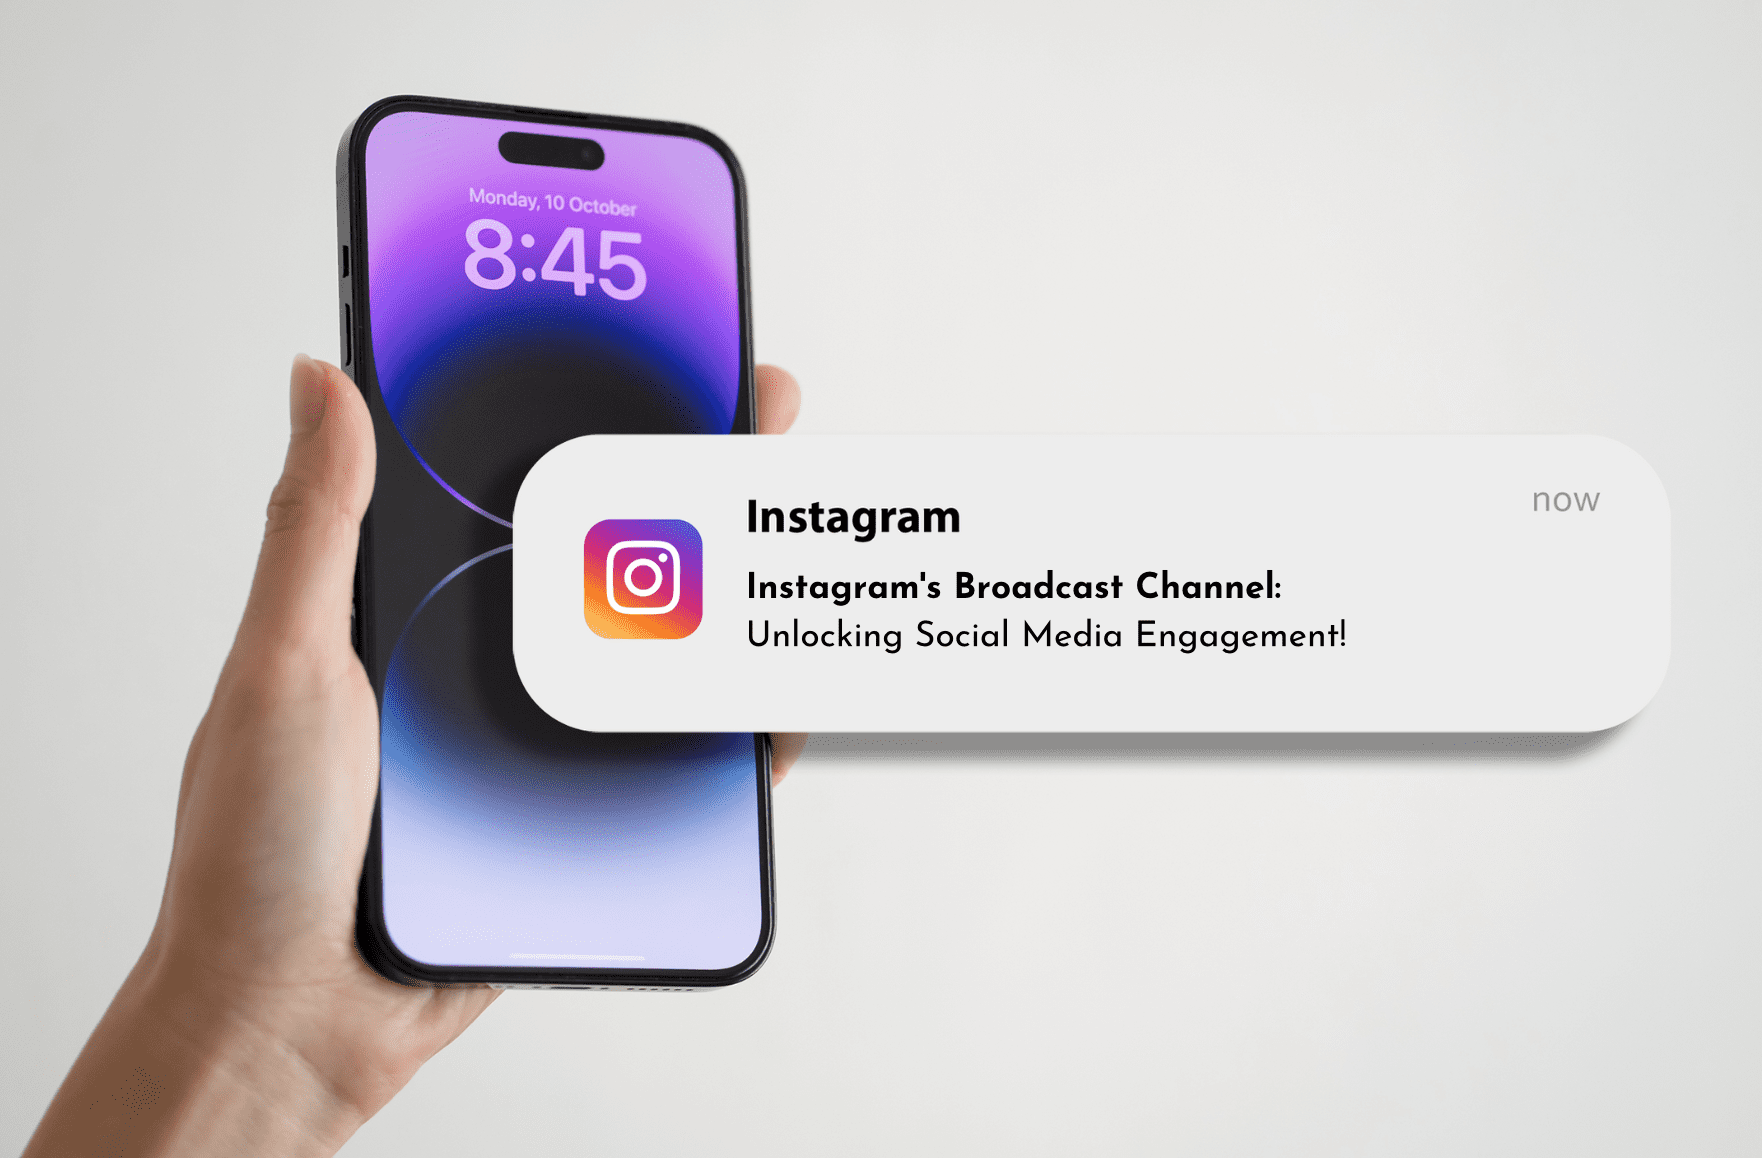 Instagram’s Broadcast Channel: Unlocking Social Media Engagement!